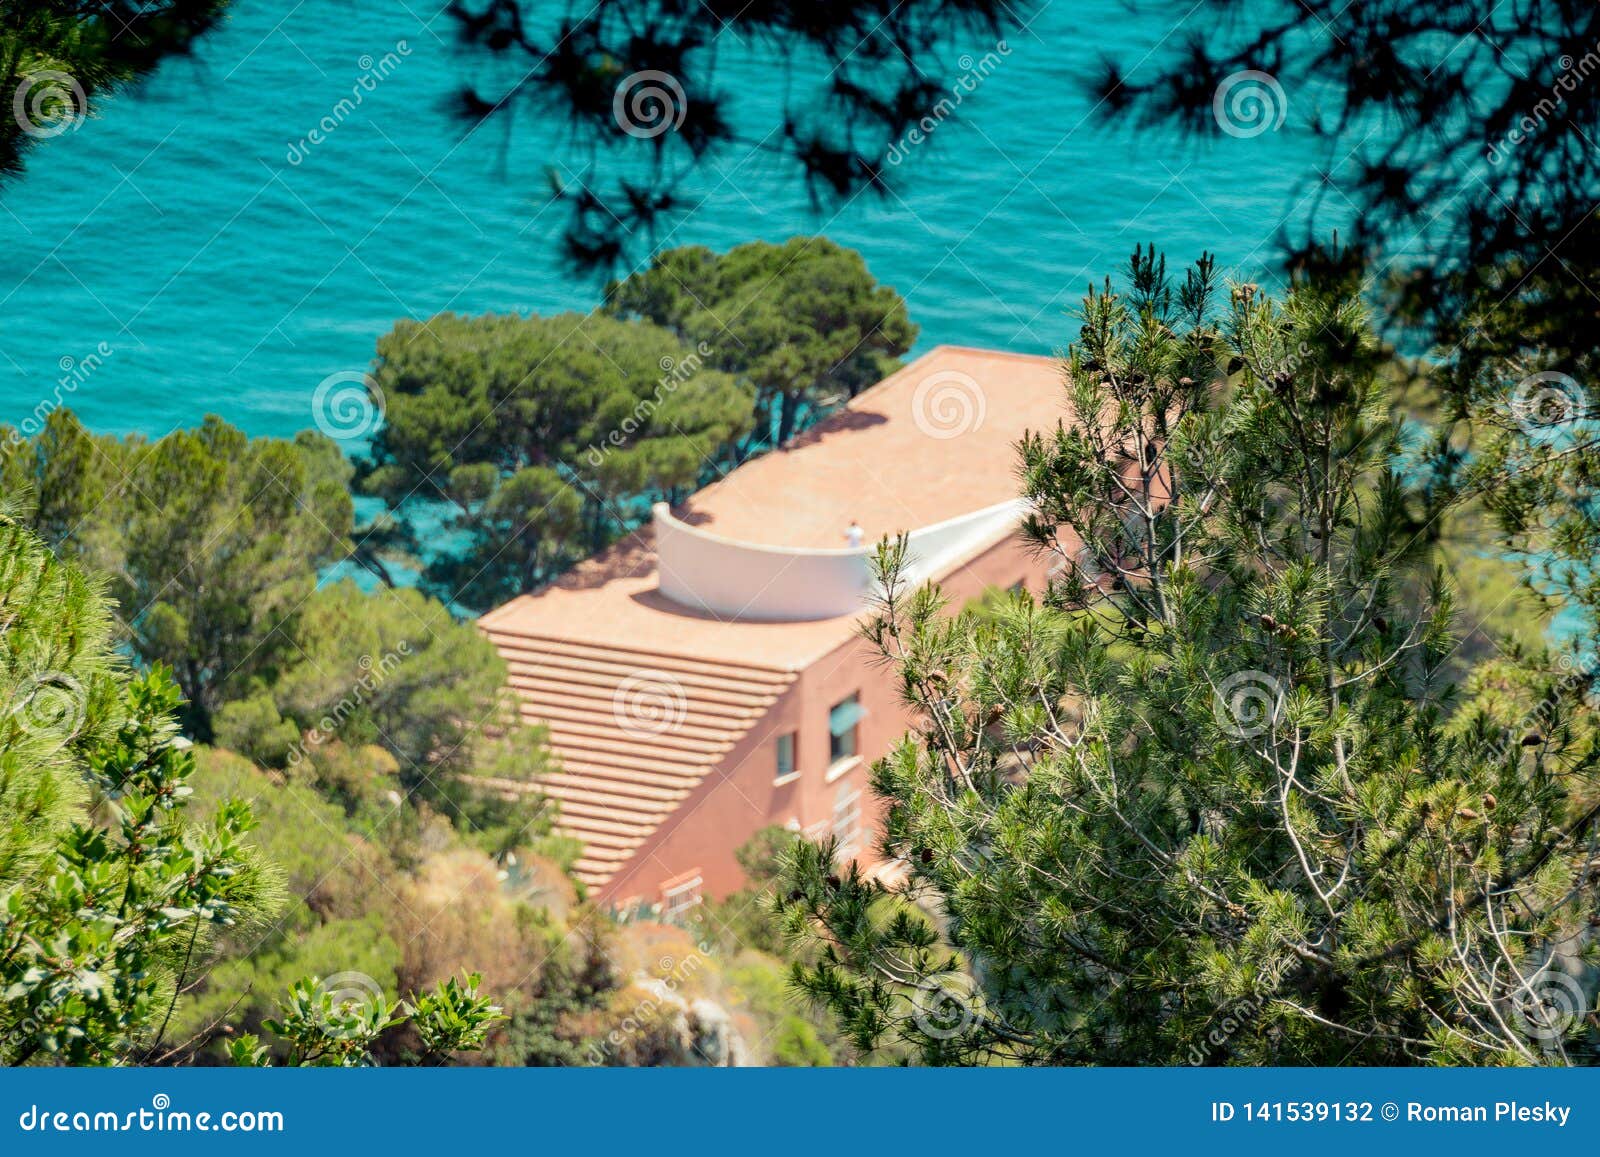 The Famous Villa Malaparte On The Island Of Capri Italy Stock Photo Image Of Italy Magazine